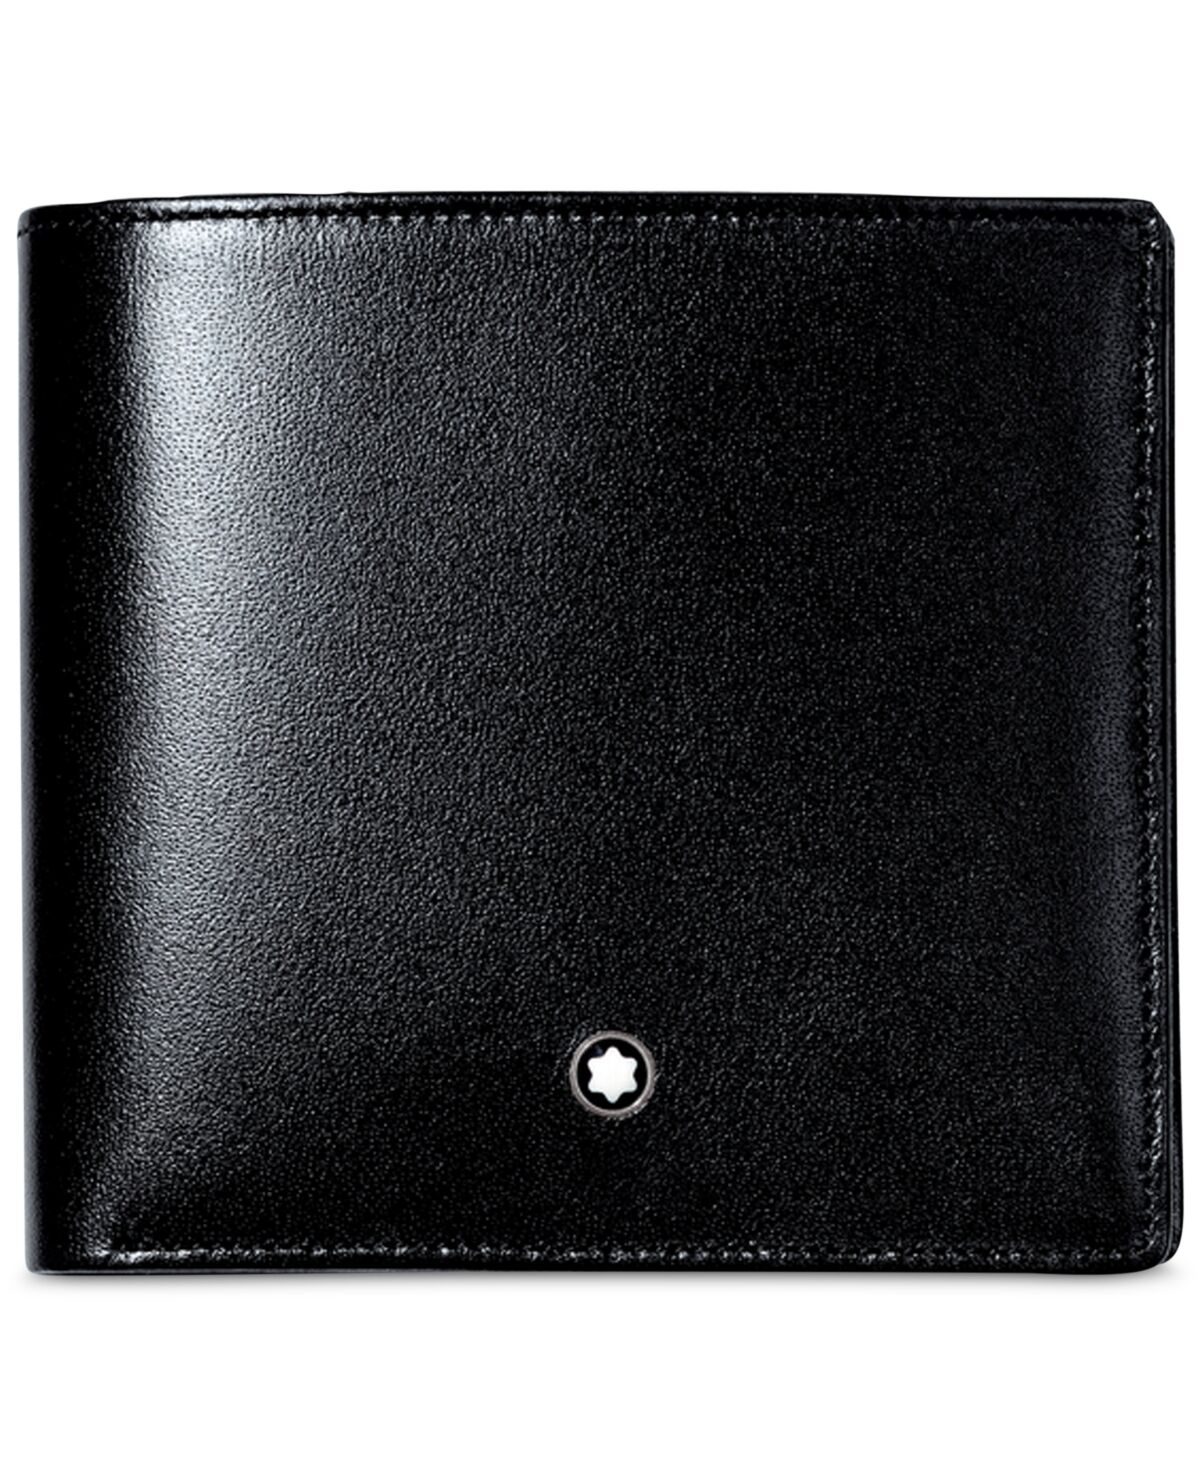 Montblanc Men's Black Leather Meisterstuck Wallet 7163 - Black